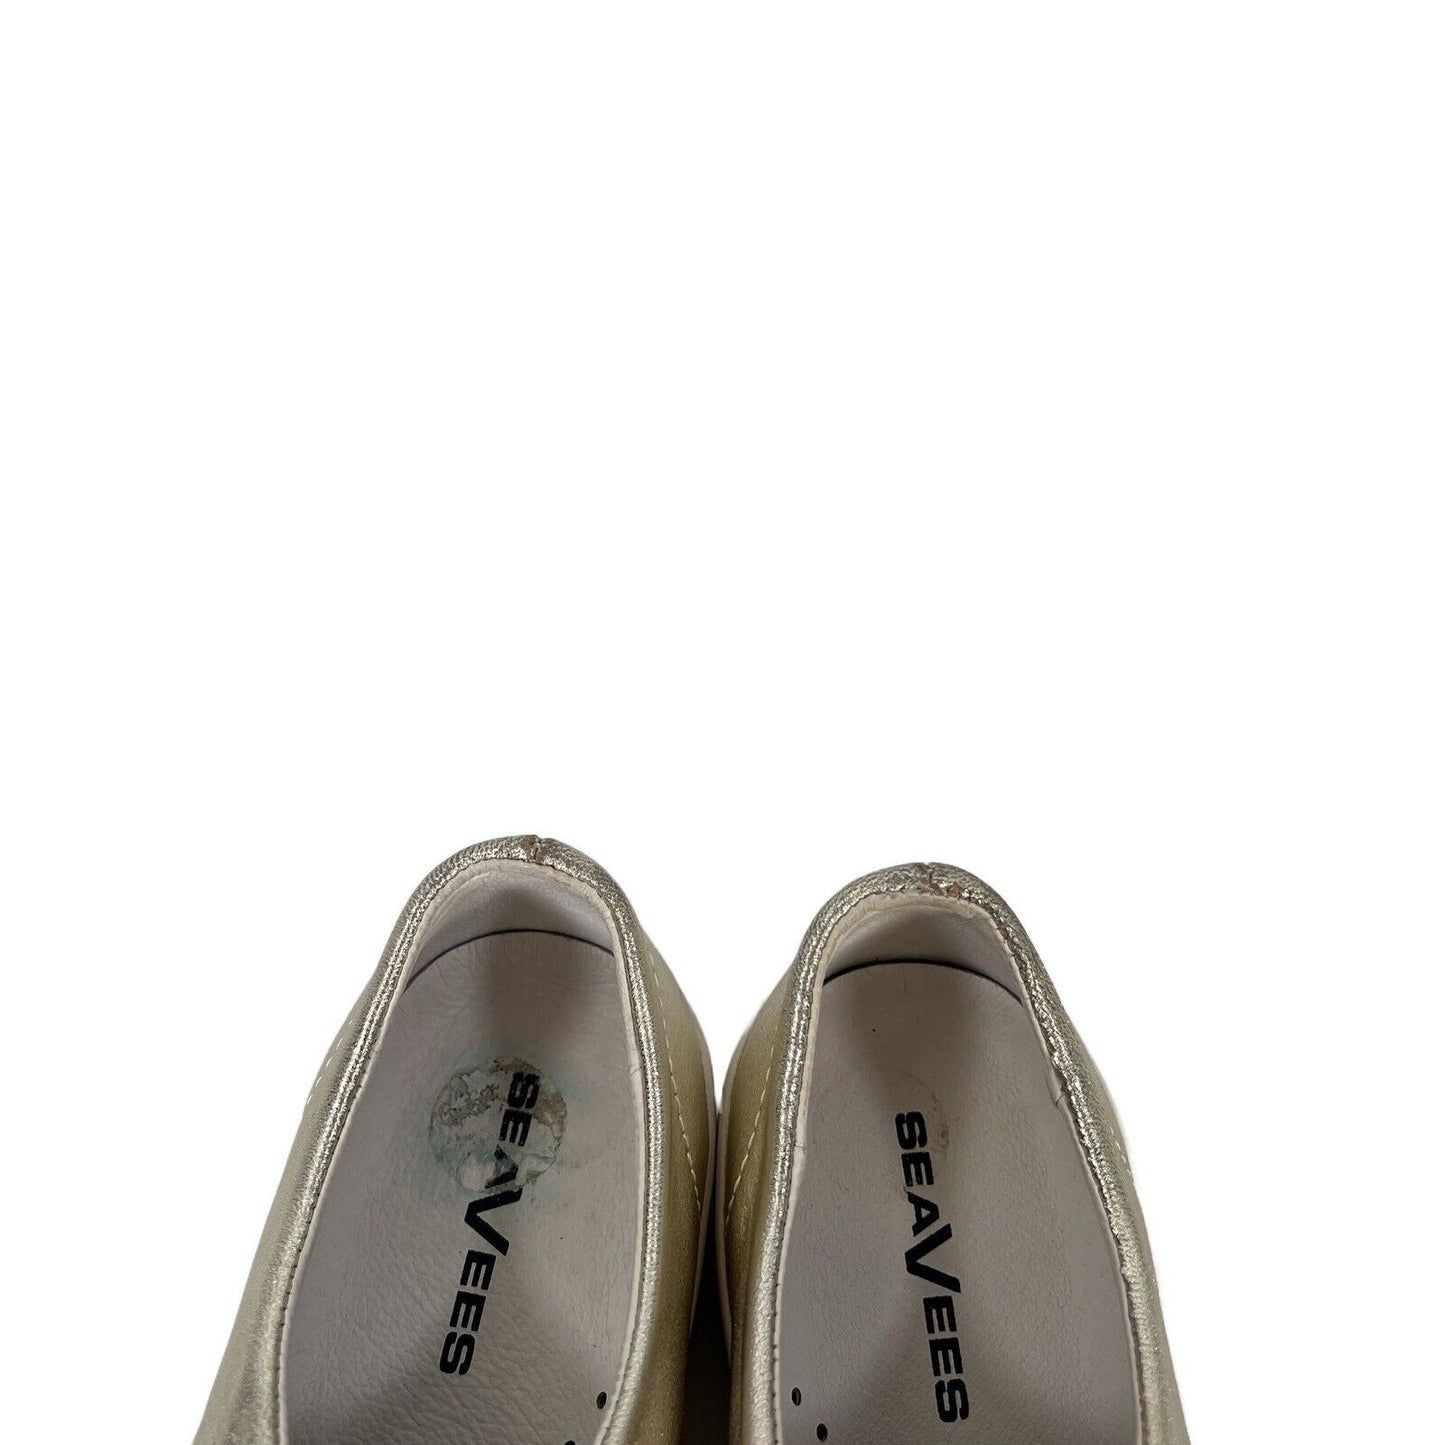 SeaVees Womens Goldtone Metallic Leather Sunset Strip Slip On Sneakers -8